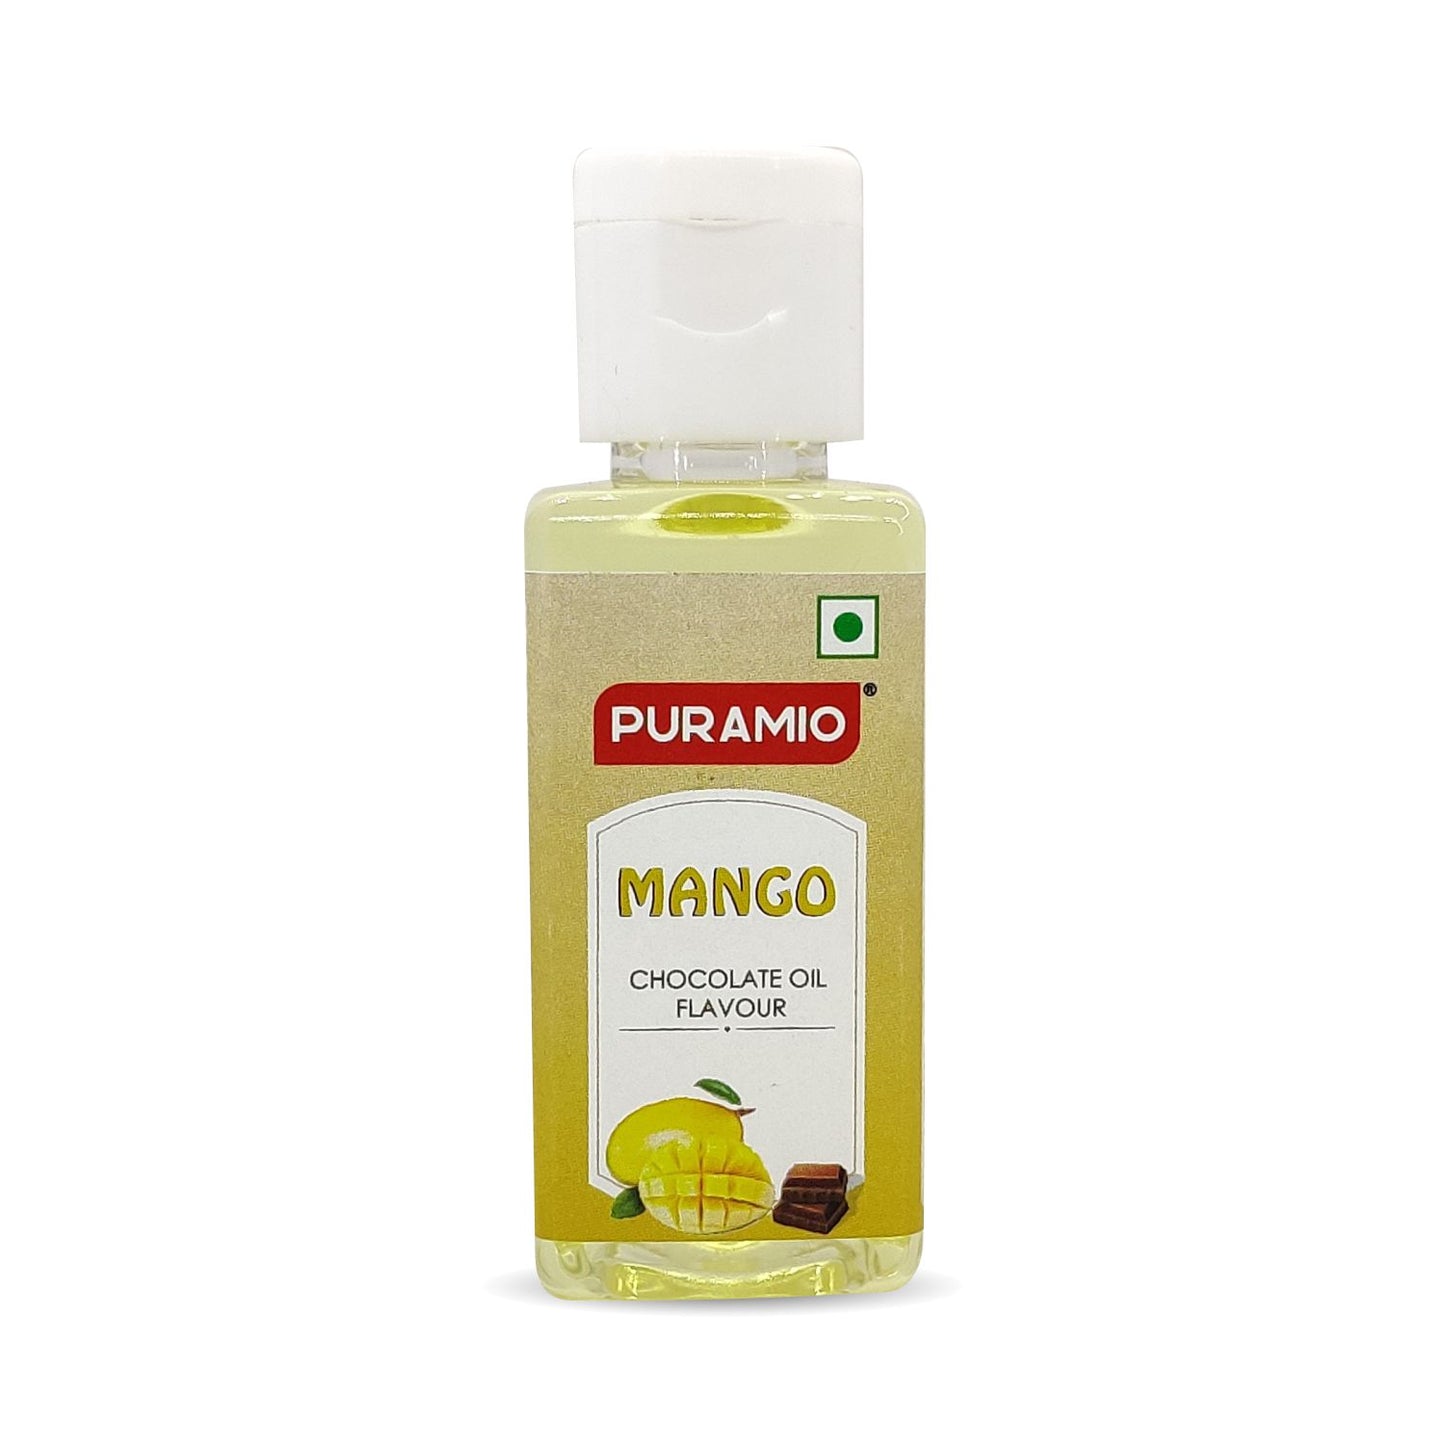 Puramio Chocolate Oil Flavour - Mango